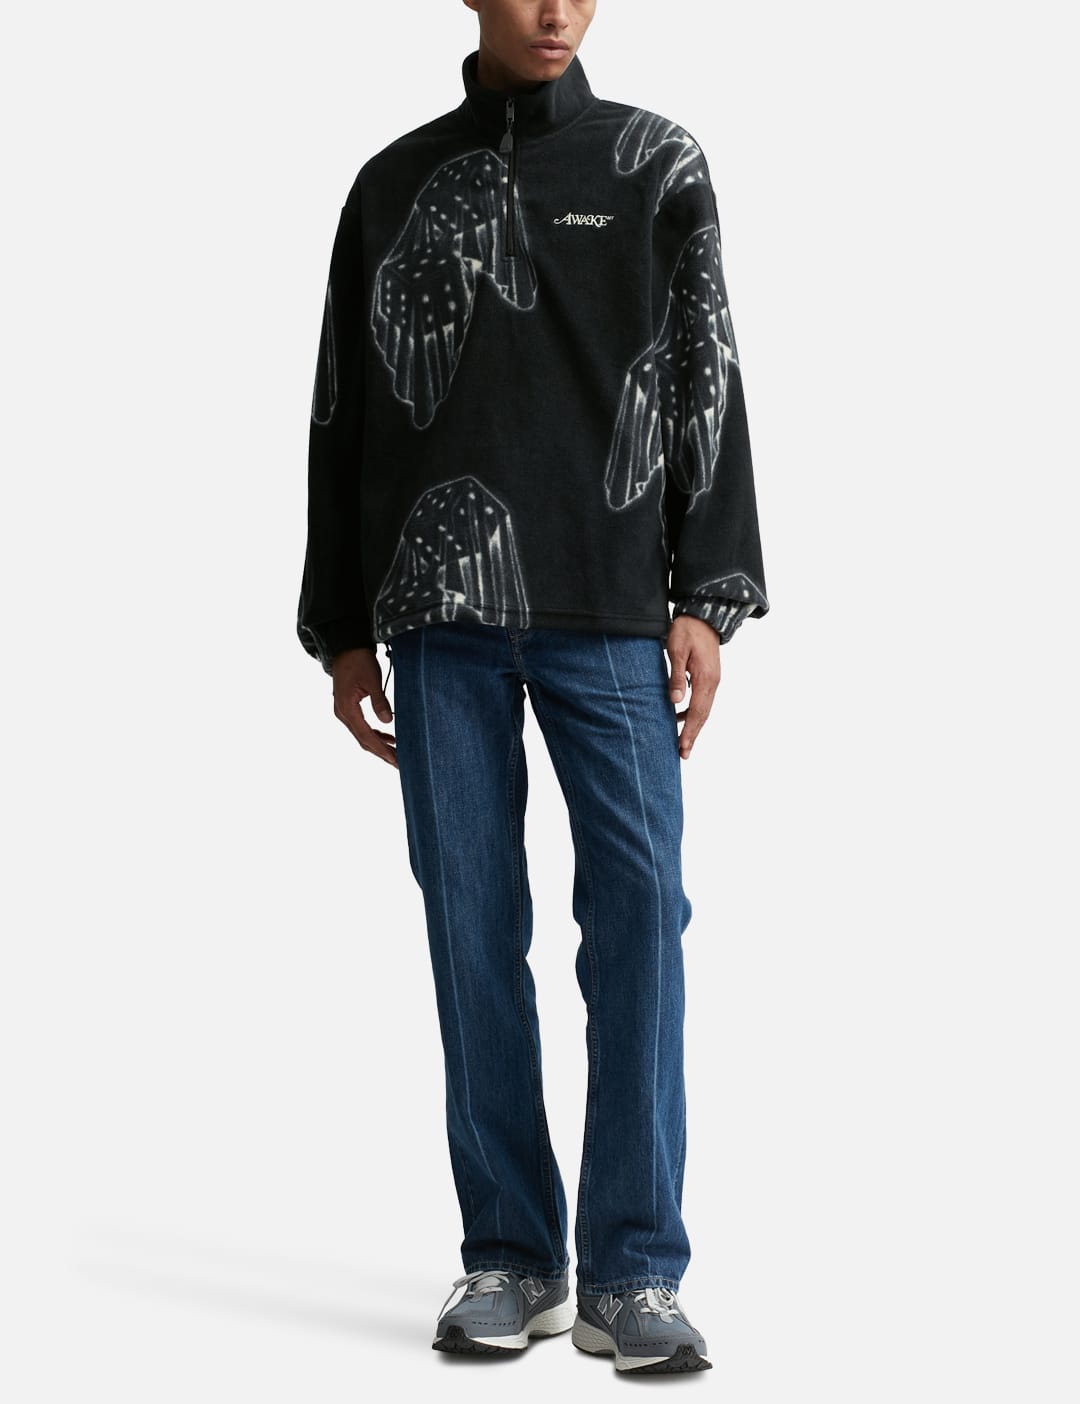 Awake NY - Dice Print Fleece Quarter Zip Pullover | HBX - Globally 